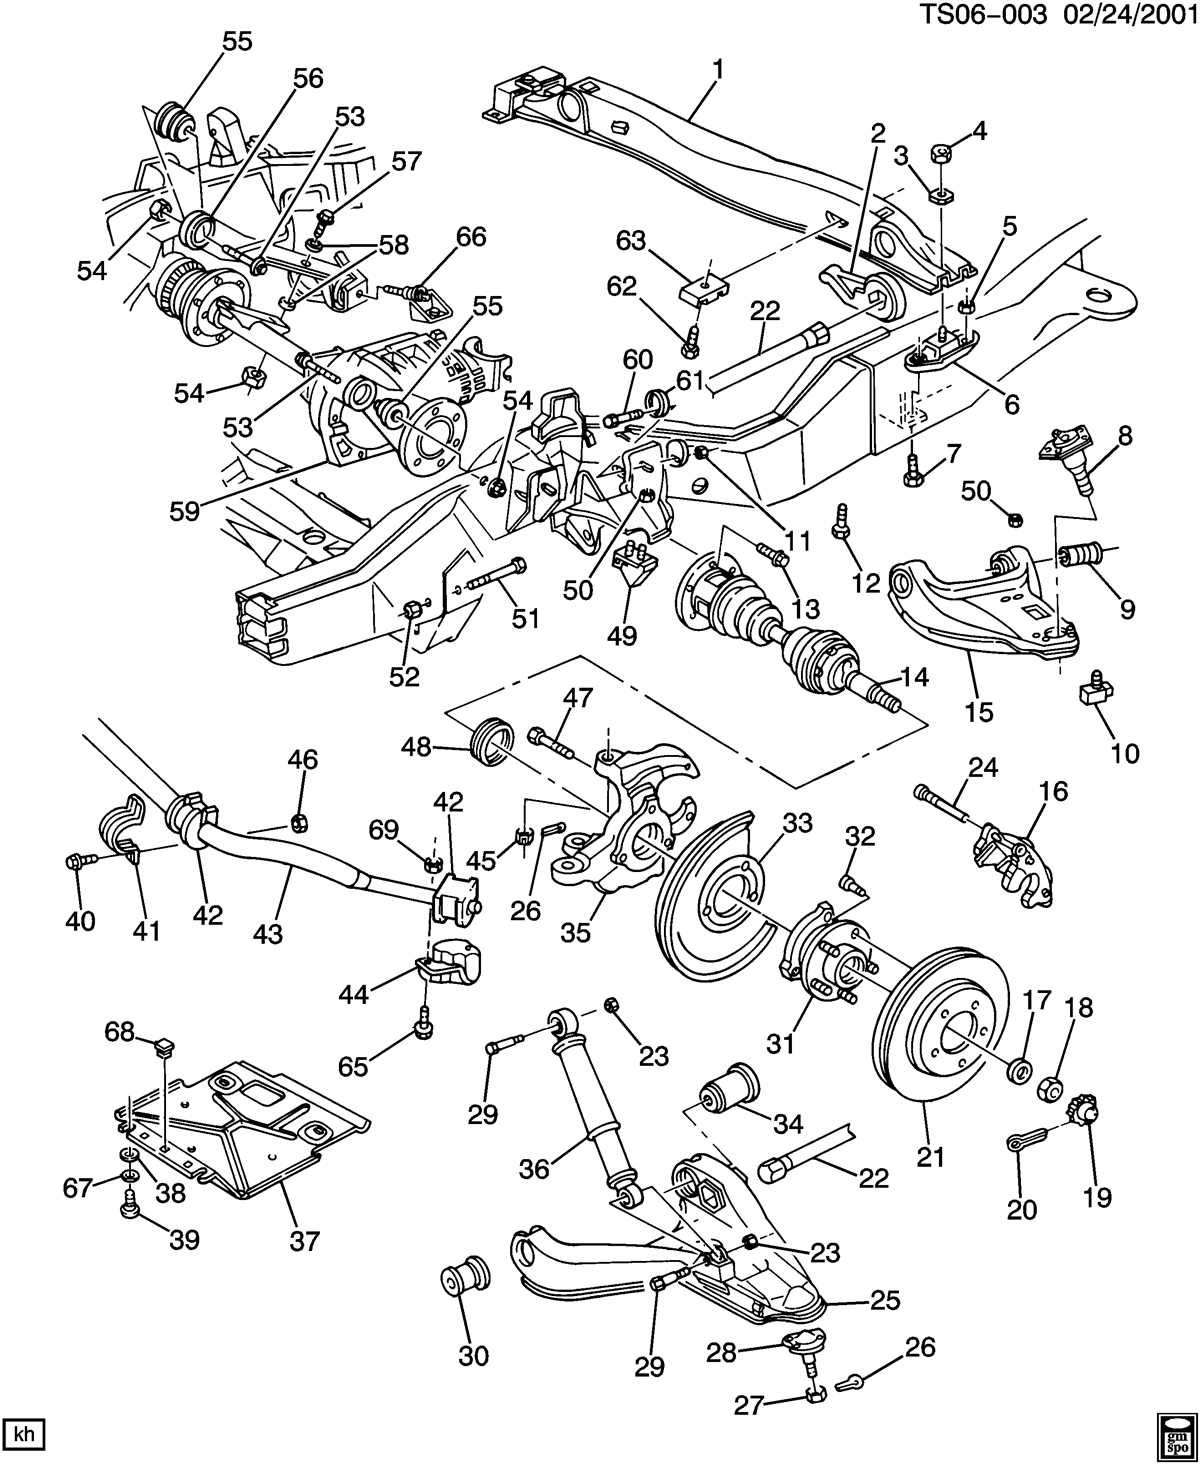 Chevy s10 4x4 front suspension diagram